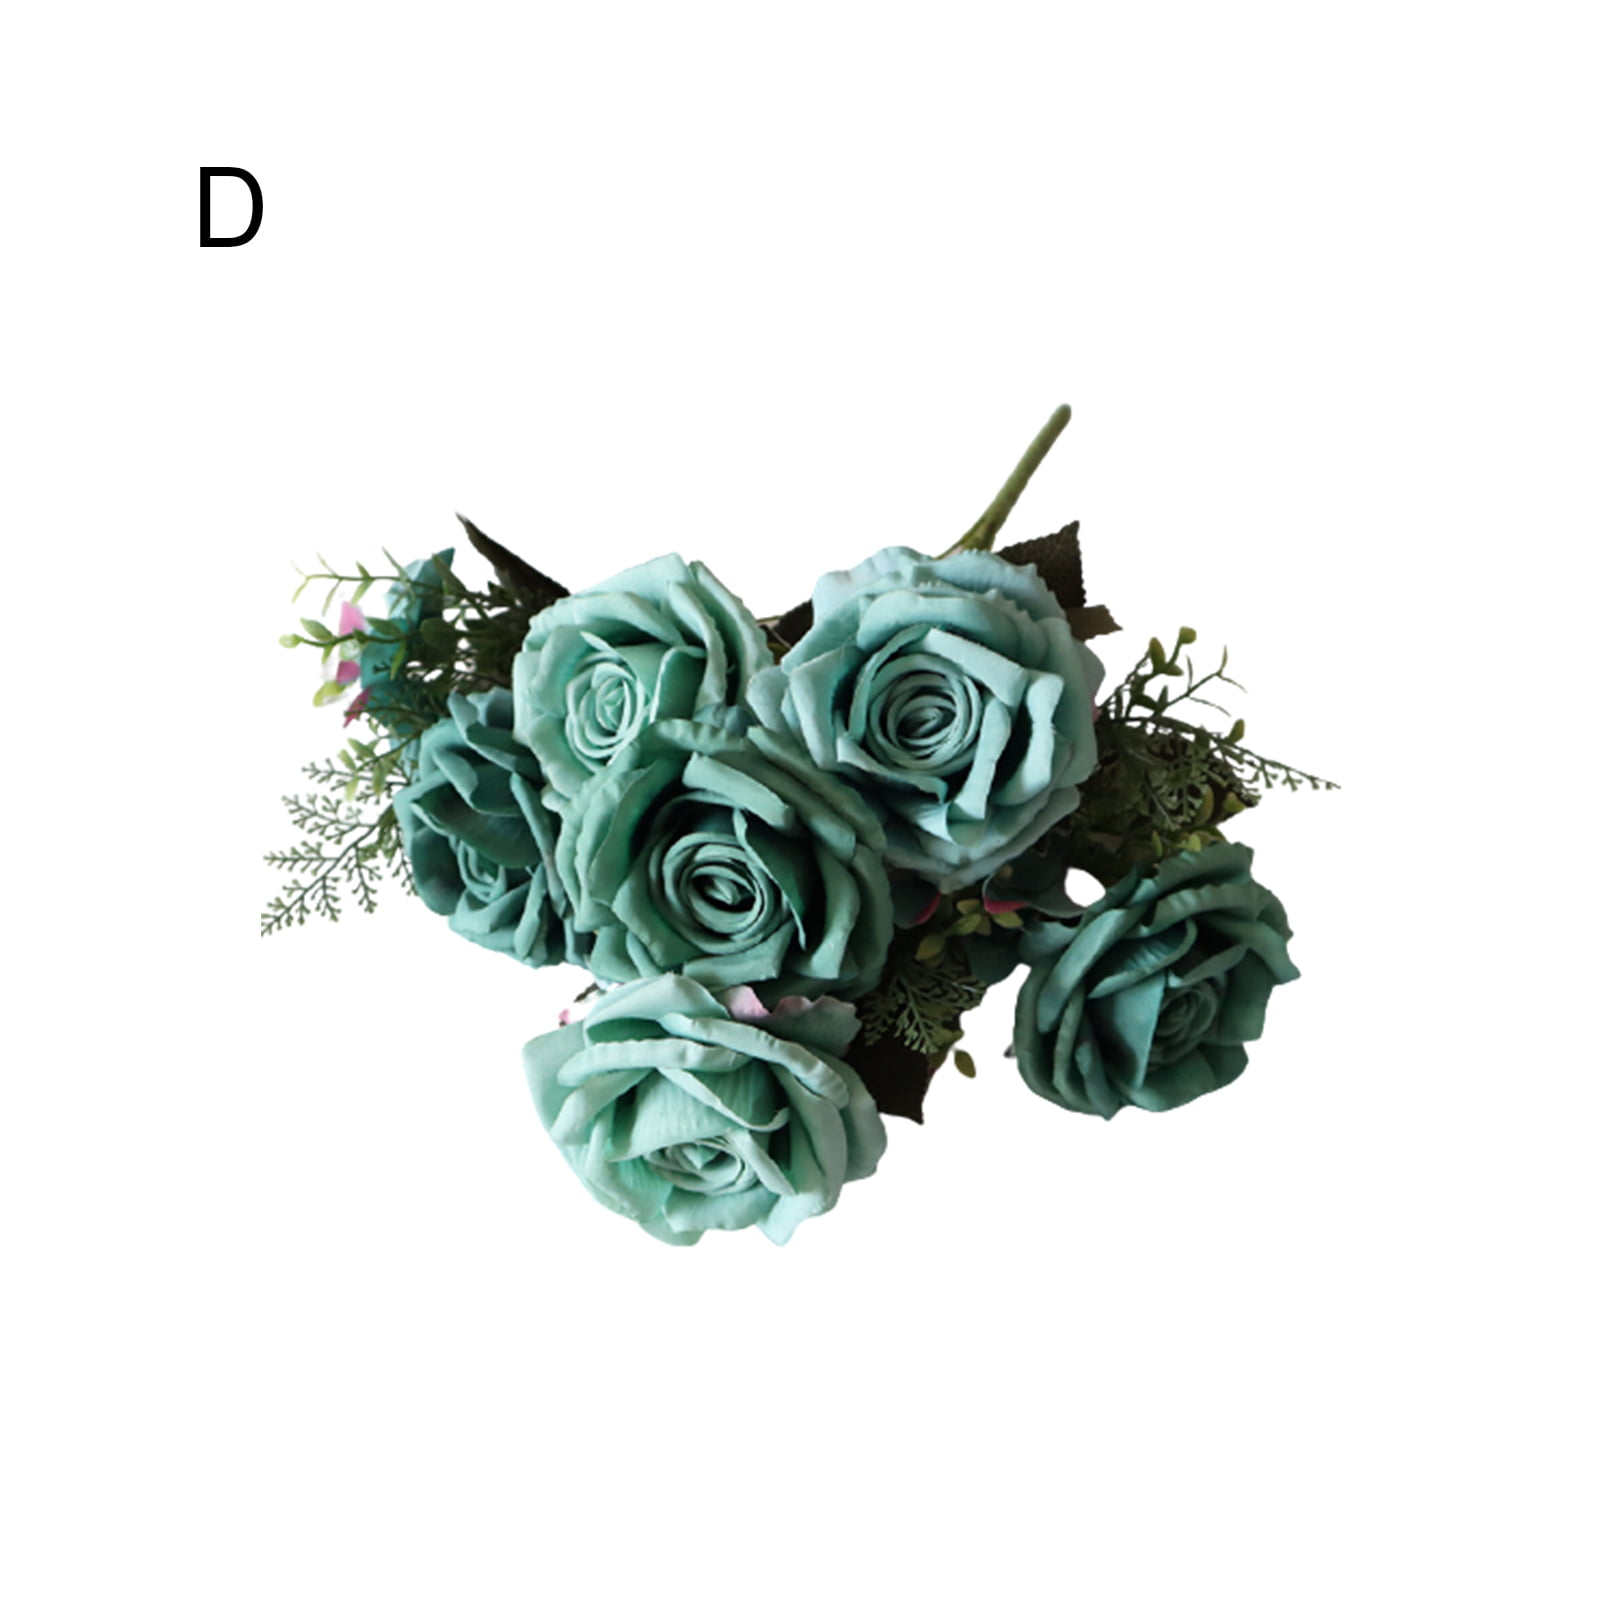 Details about   30Pcs Silk Rose Head Artificial Pretty Flowers European Wedding Party Home Decor 